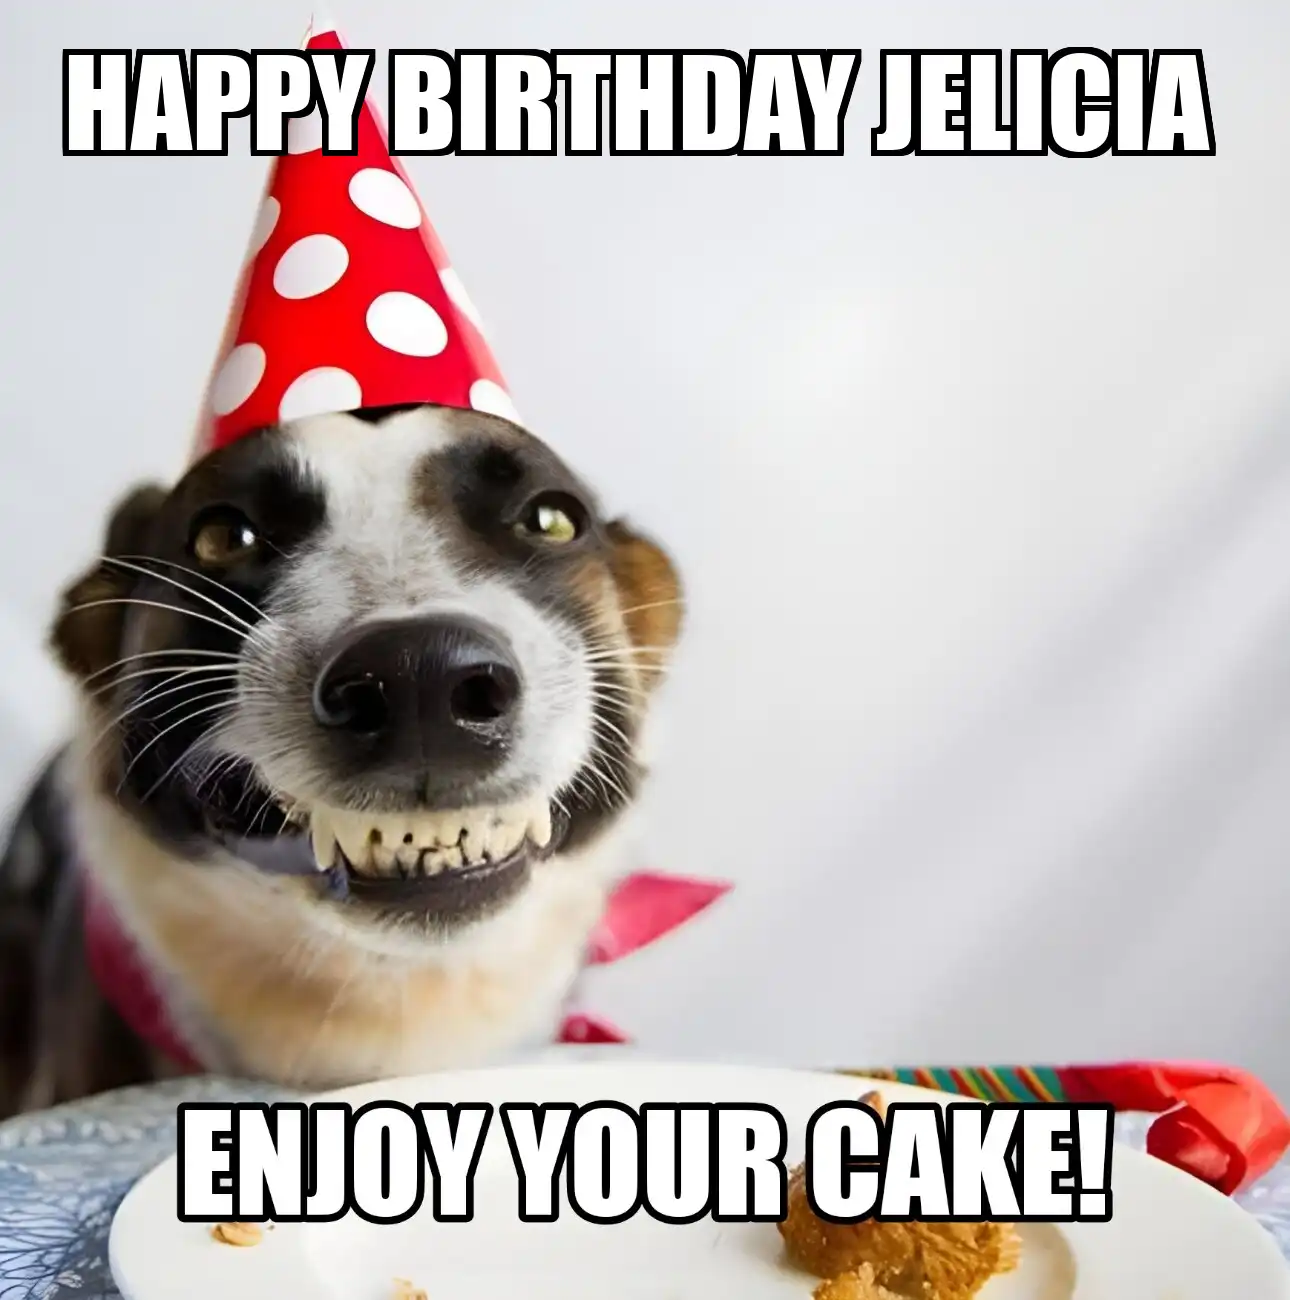 Happy Birthday Jelicia Enjoy Your Cake Dog Meme